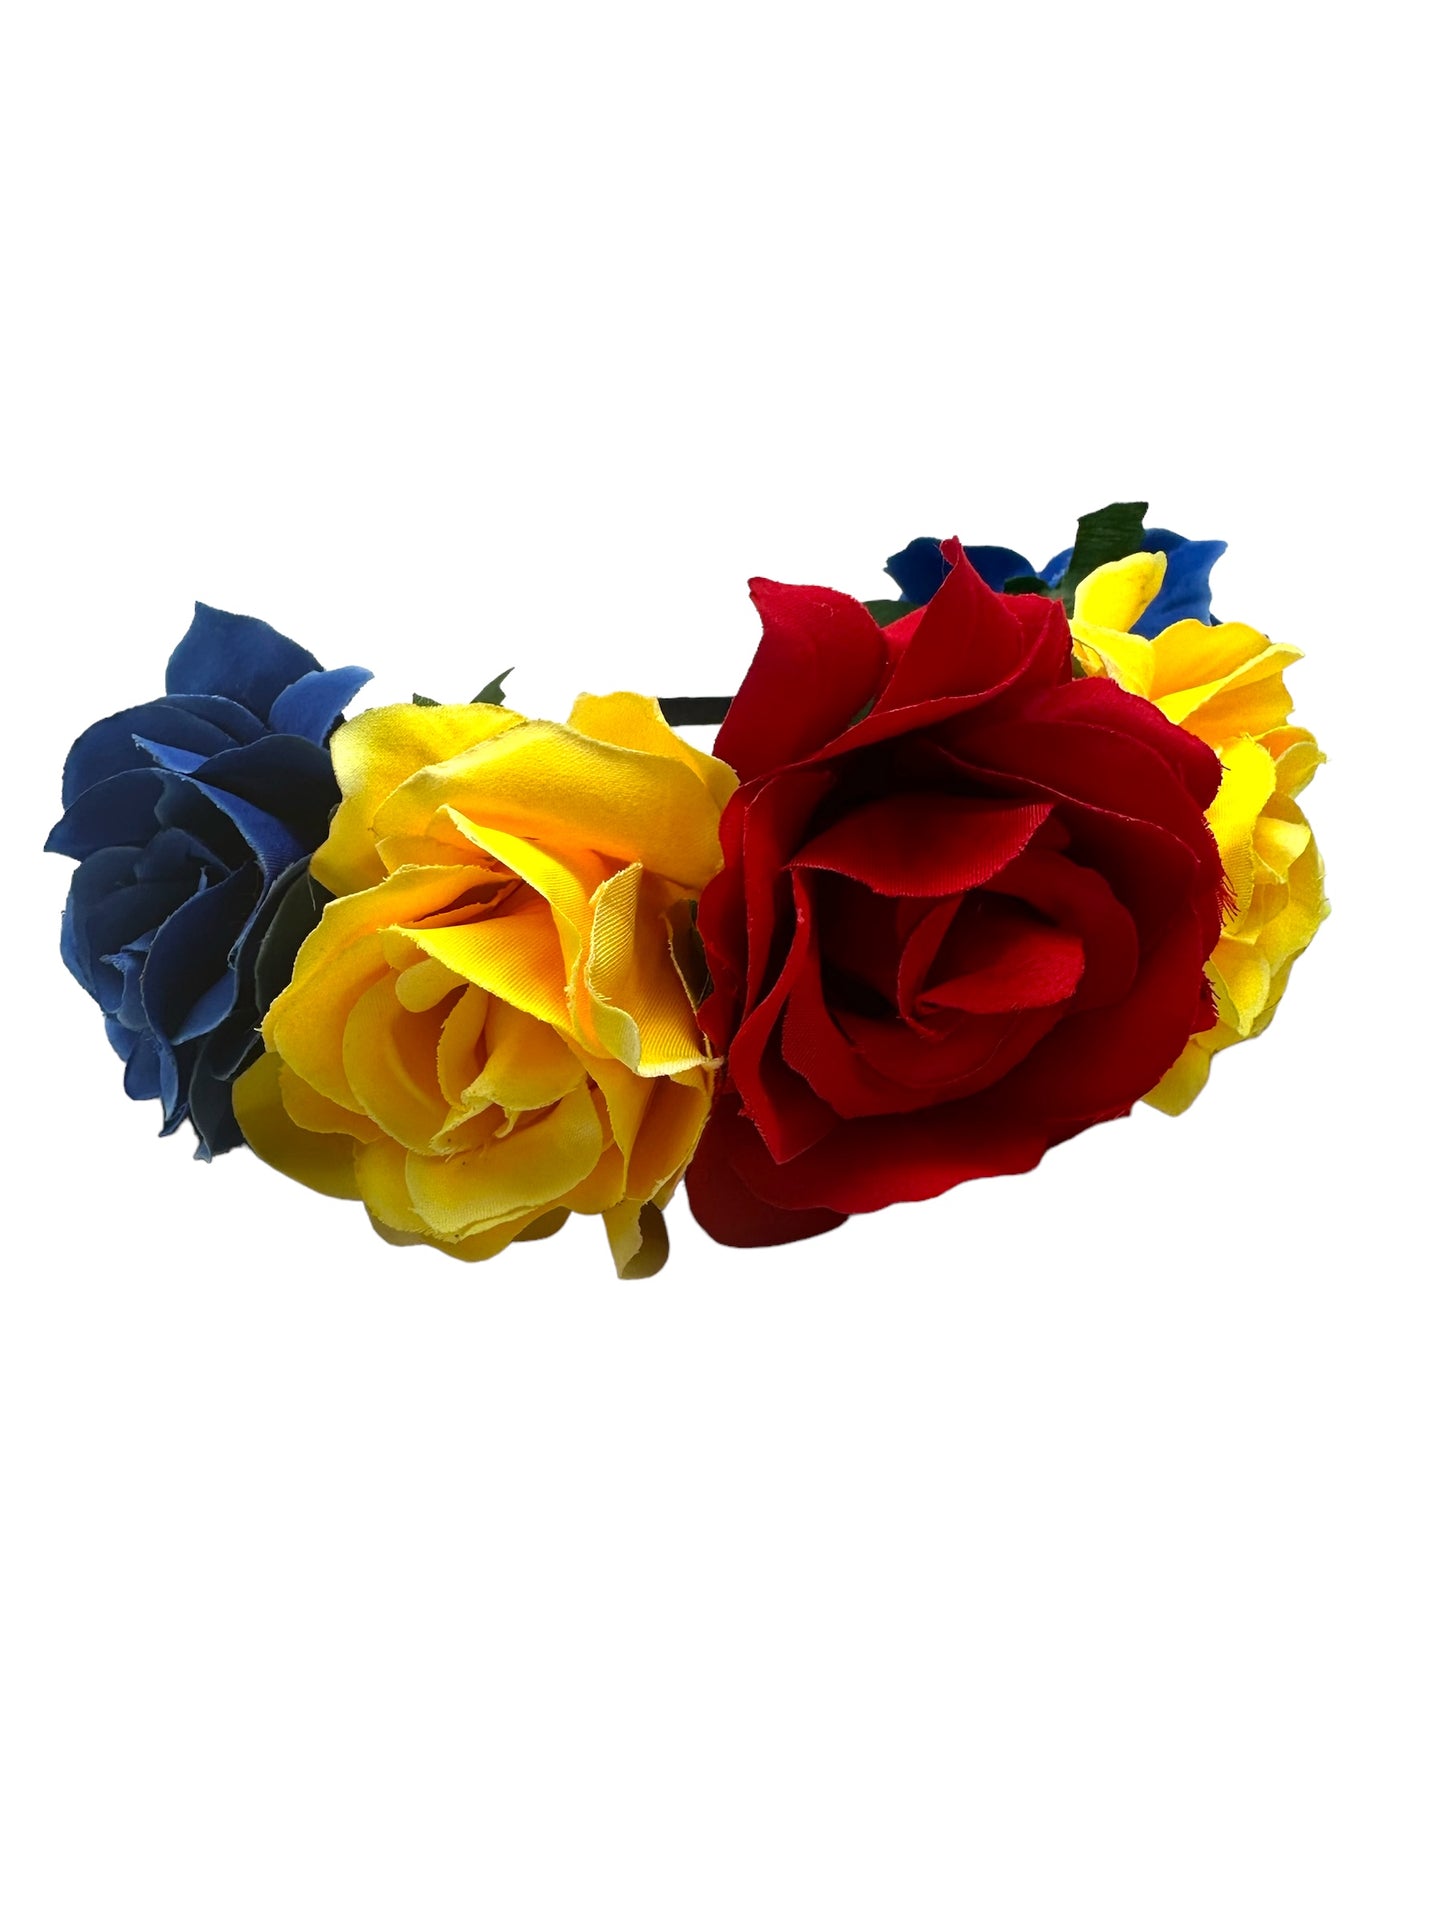 Colombia, Venezuela Ecuador Flag Inspired Flower Large Crown Headband